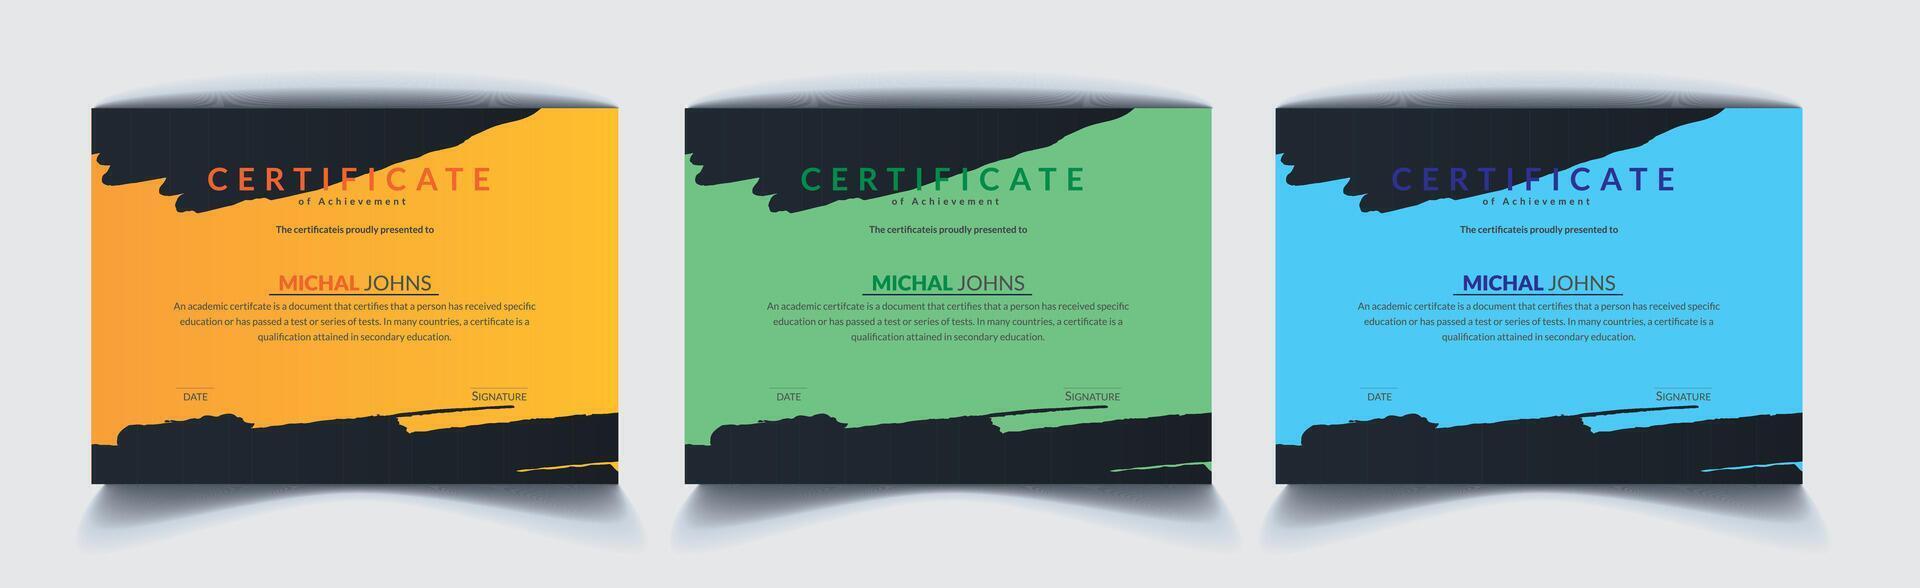 Corporate Certificate Design vector